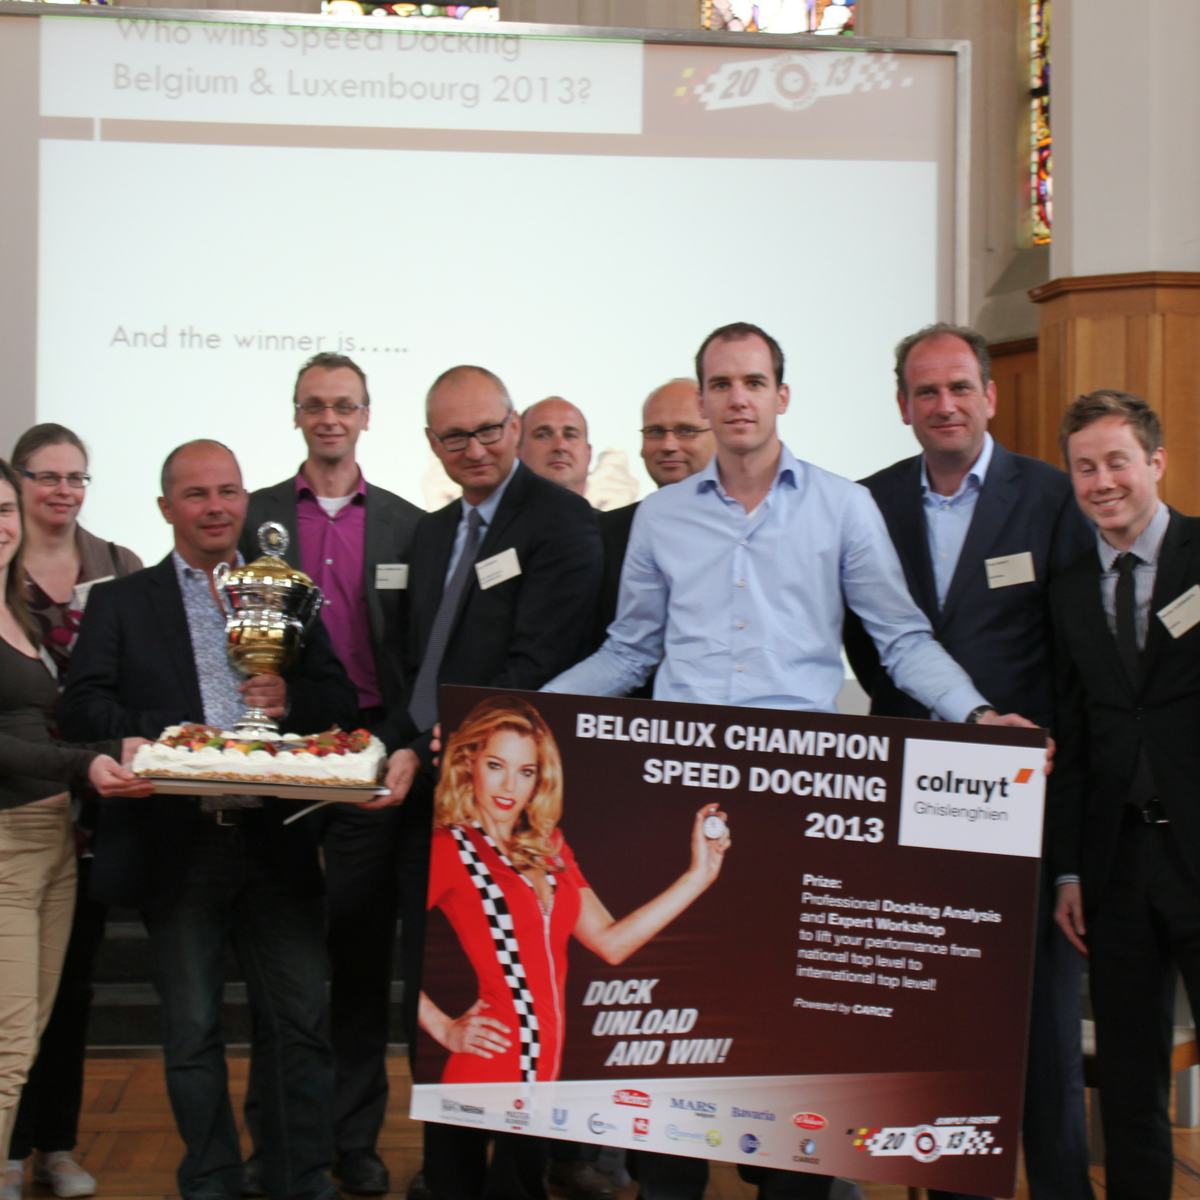 Colruyt wint Speed Docking in België-Luxemburg